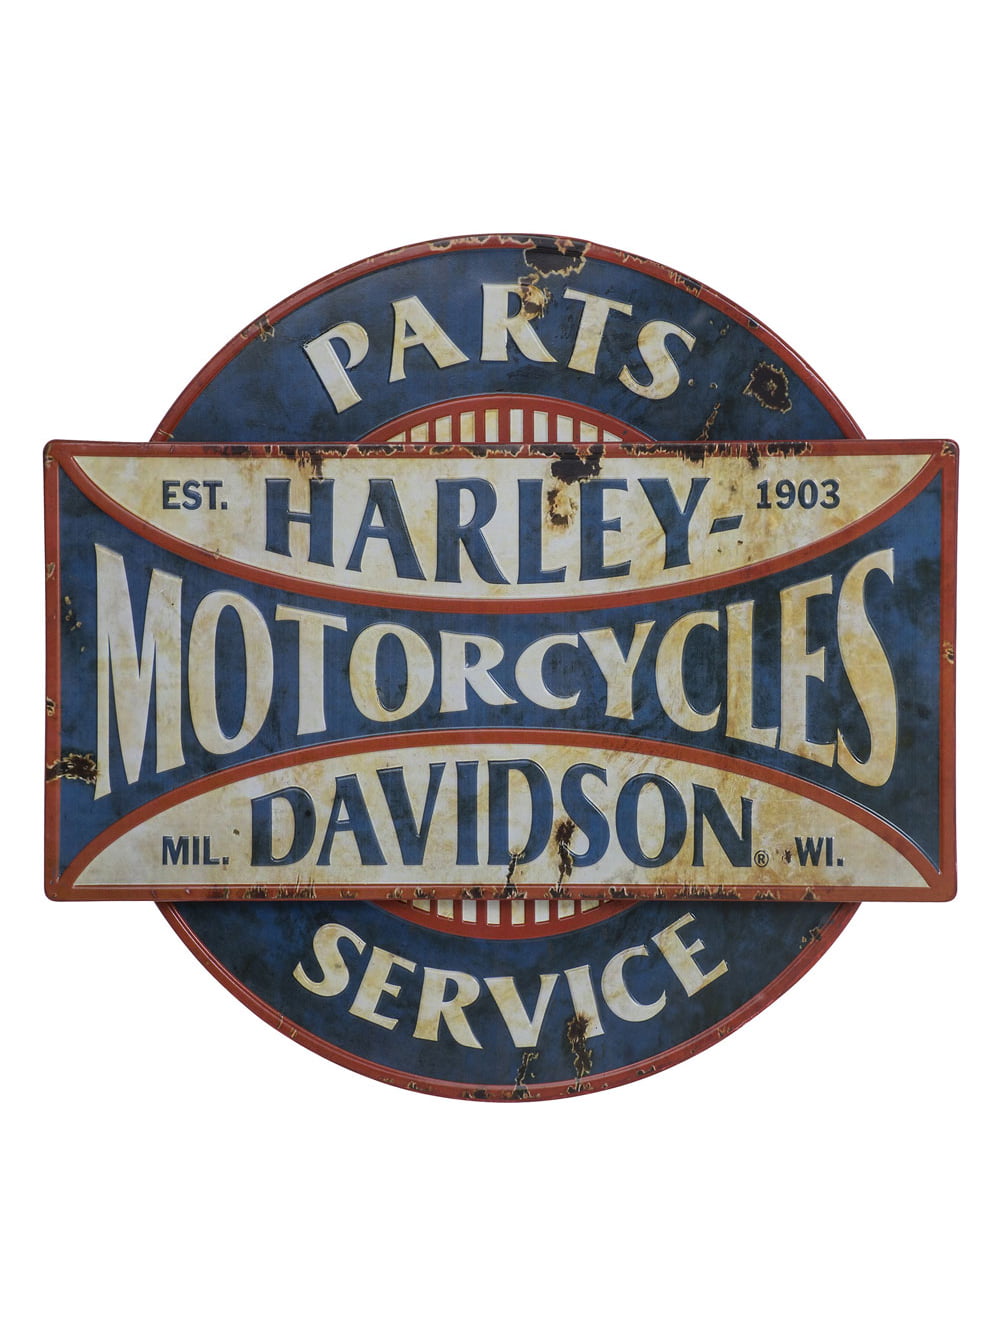 Harley Davidson Motorcycle Garage Premium Oil Can Retro Metal Tin Sign 12x8" NEW 